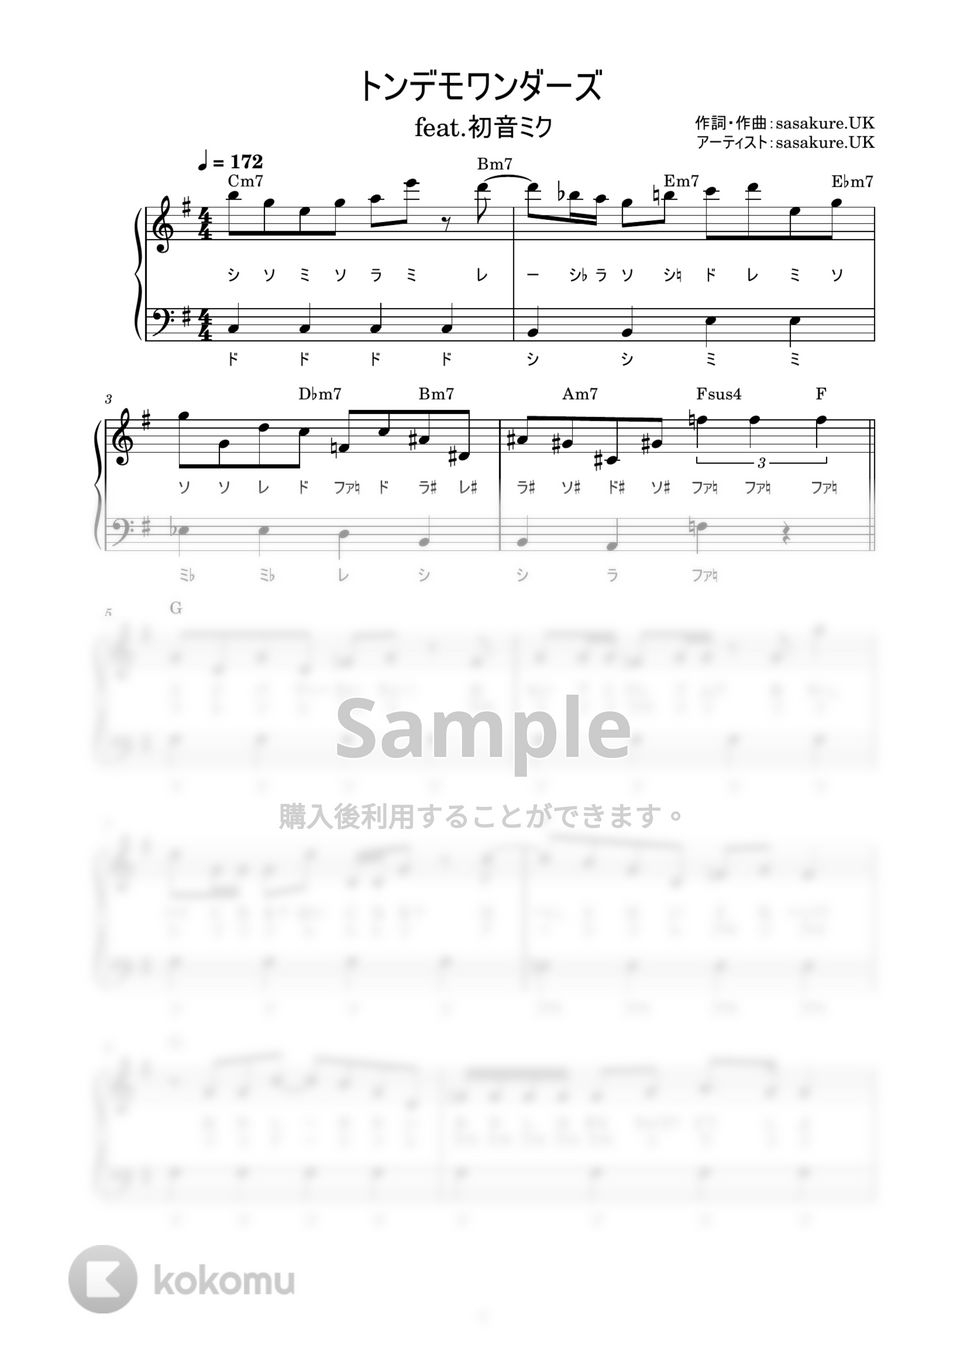 sasakure.UK - トンデモワンダーズ feat. 初音ミク (かんたん / 歌詞付き / ドレミ付き / 初心者) by piano.tokyo